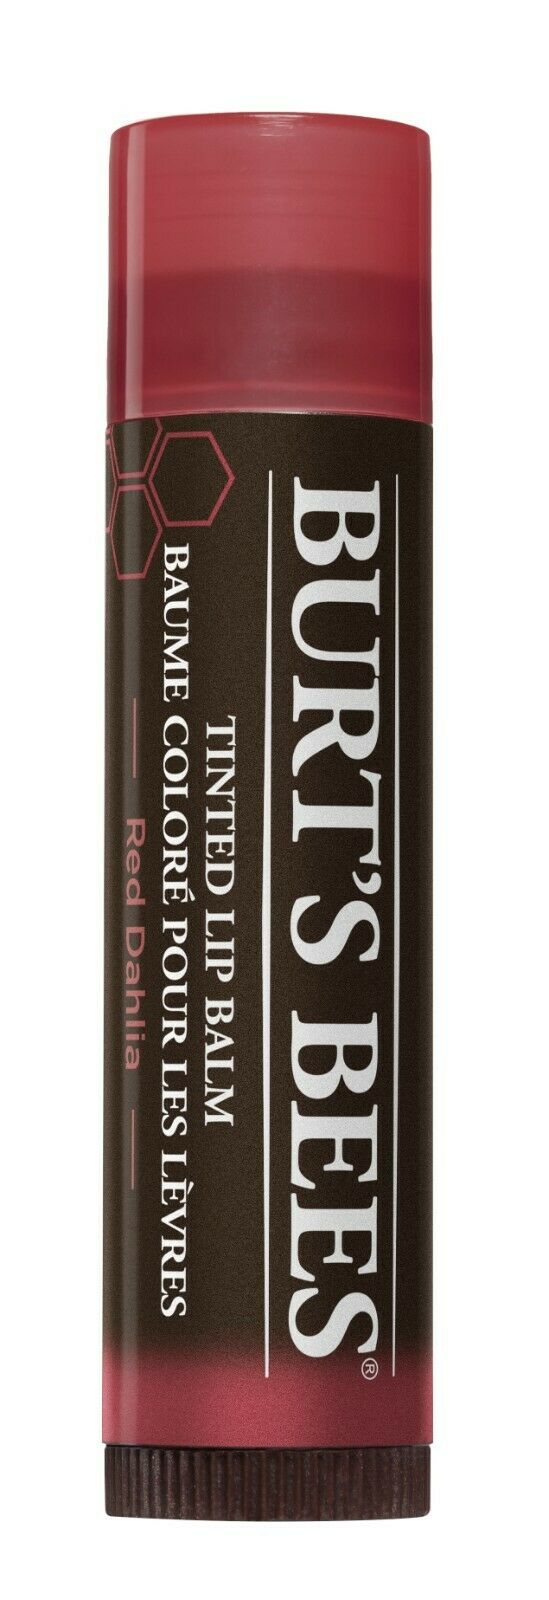 Burt's Bees Red Dahlia Tinted Lip Balm 0.15 Oz - Buy 2 Get 1 Free! 🐝